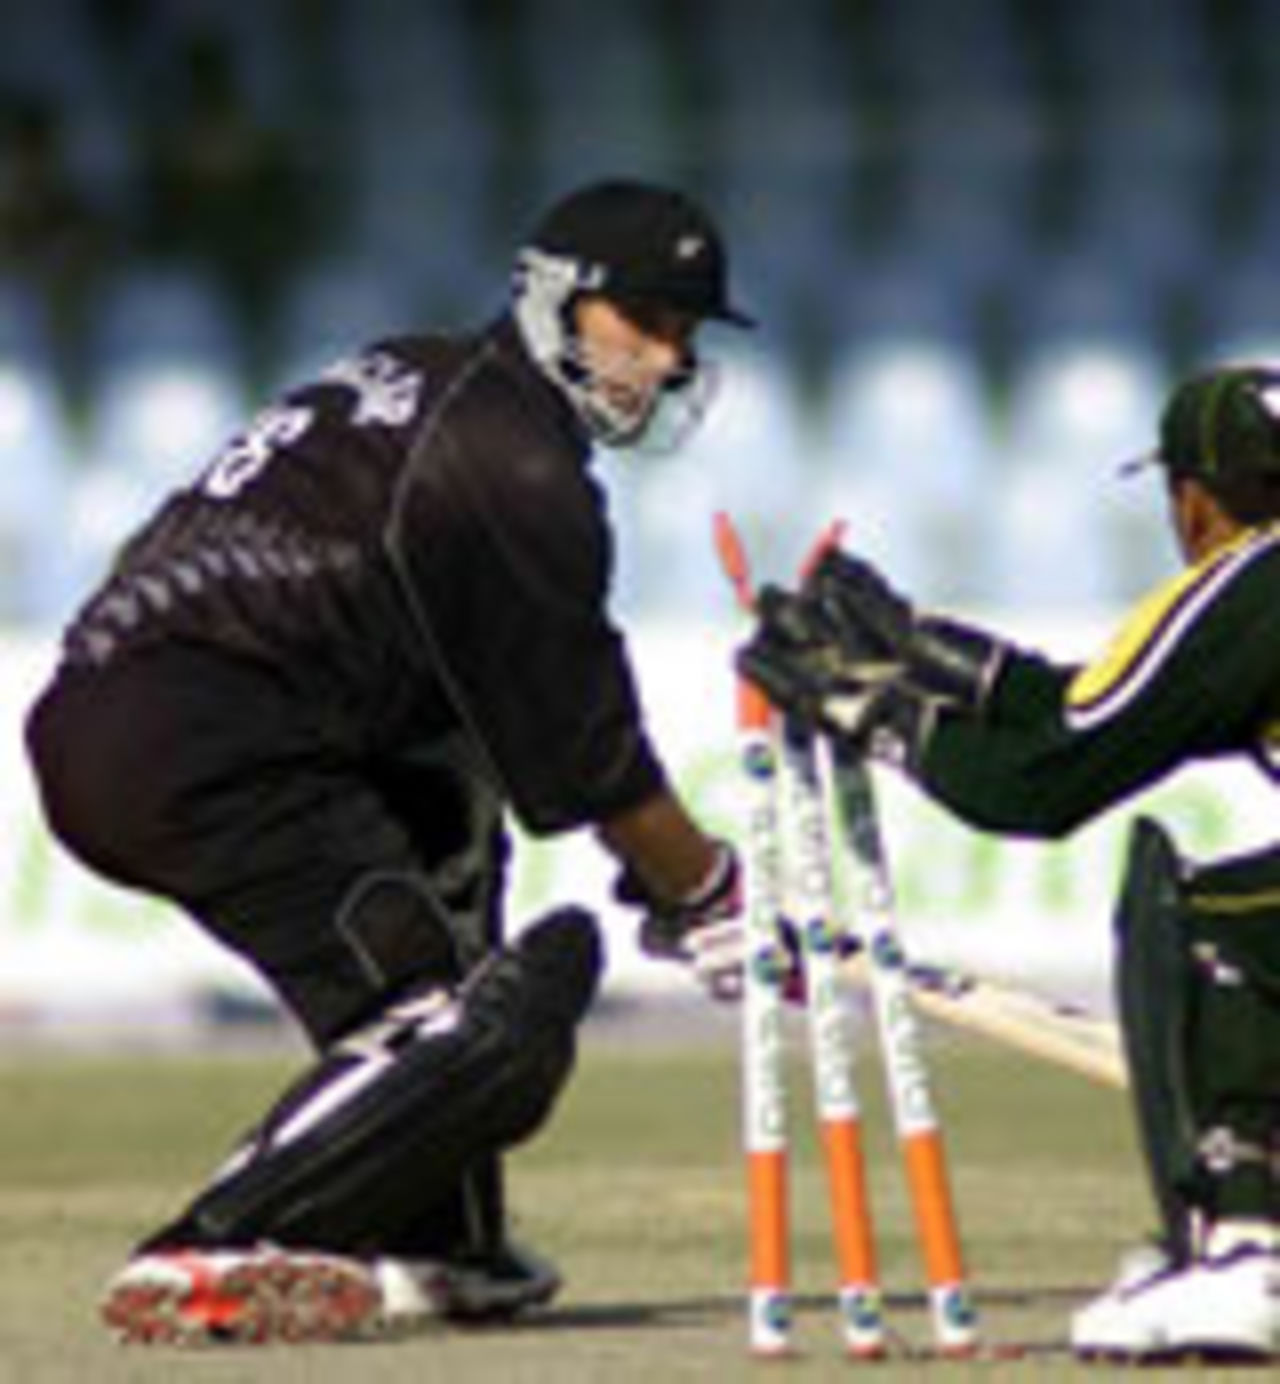 Mathew Sinclair stumped by Moin Khan, Pakistan v New Zealand, 1st ODI, Lahore, November 29, 2003.